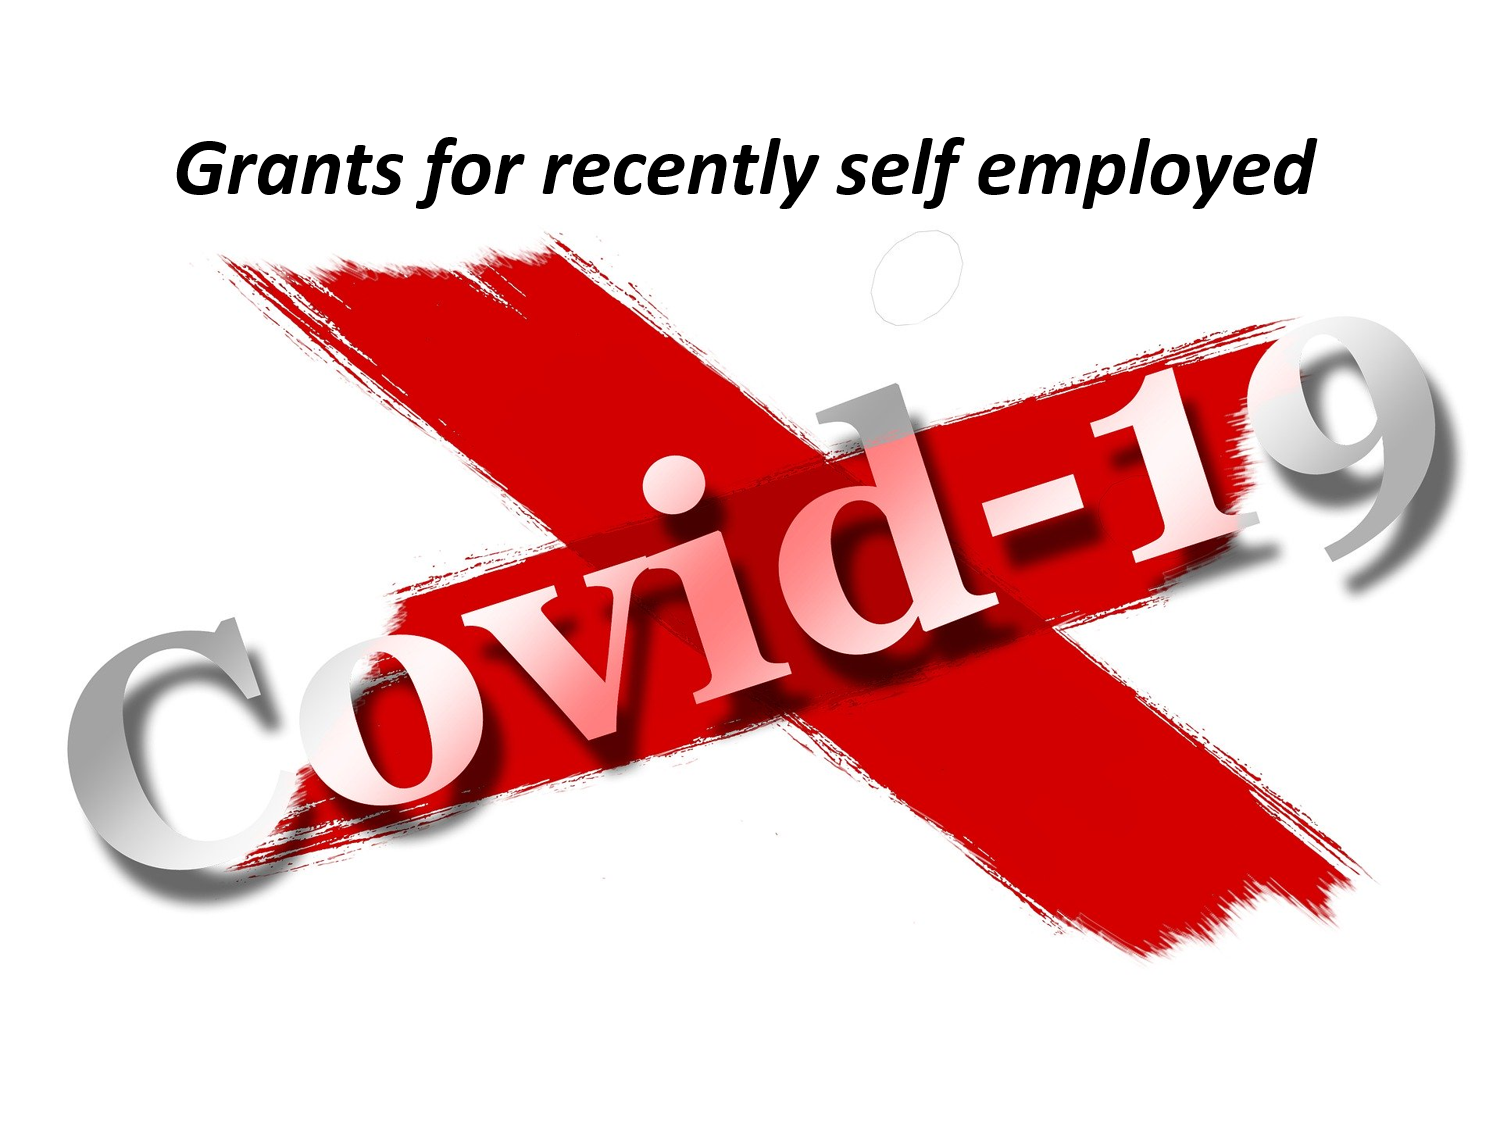 Grants recently self employed